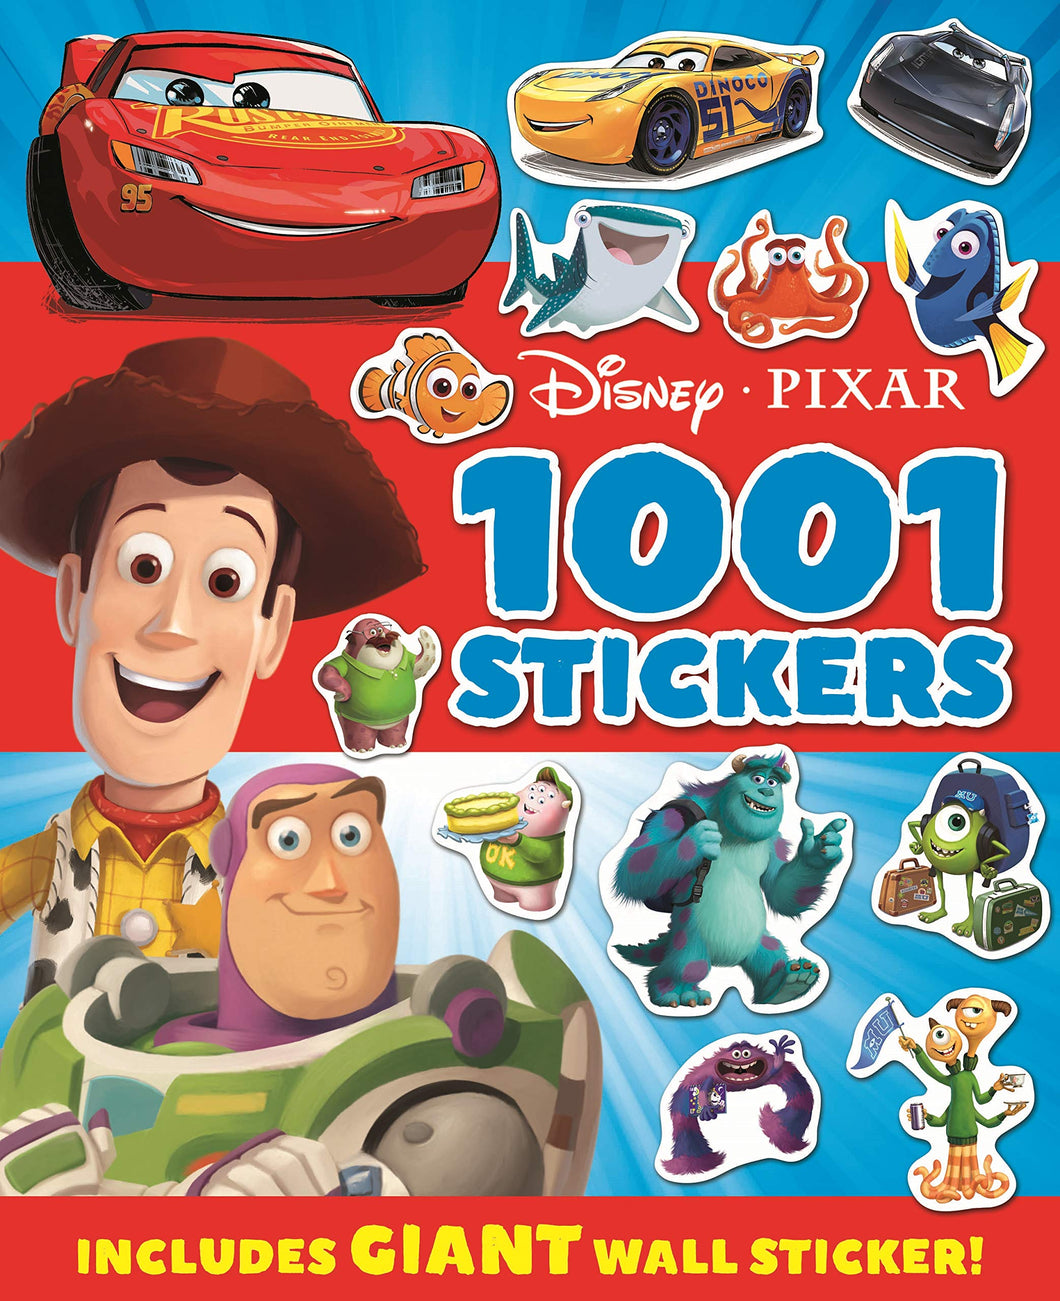 1001 Stickers: Disney Pixar